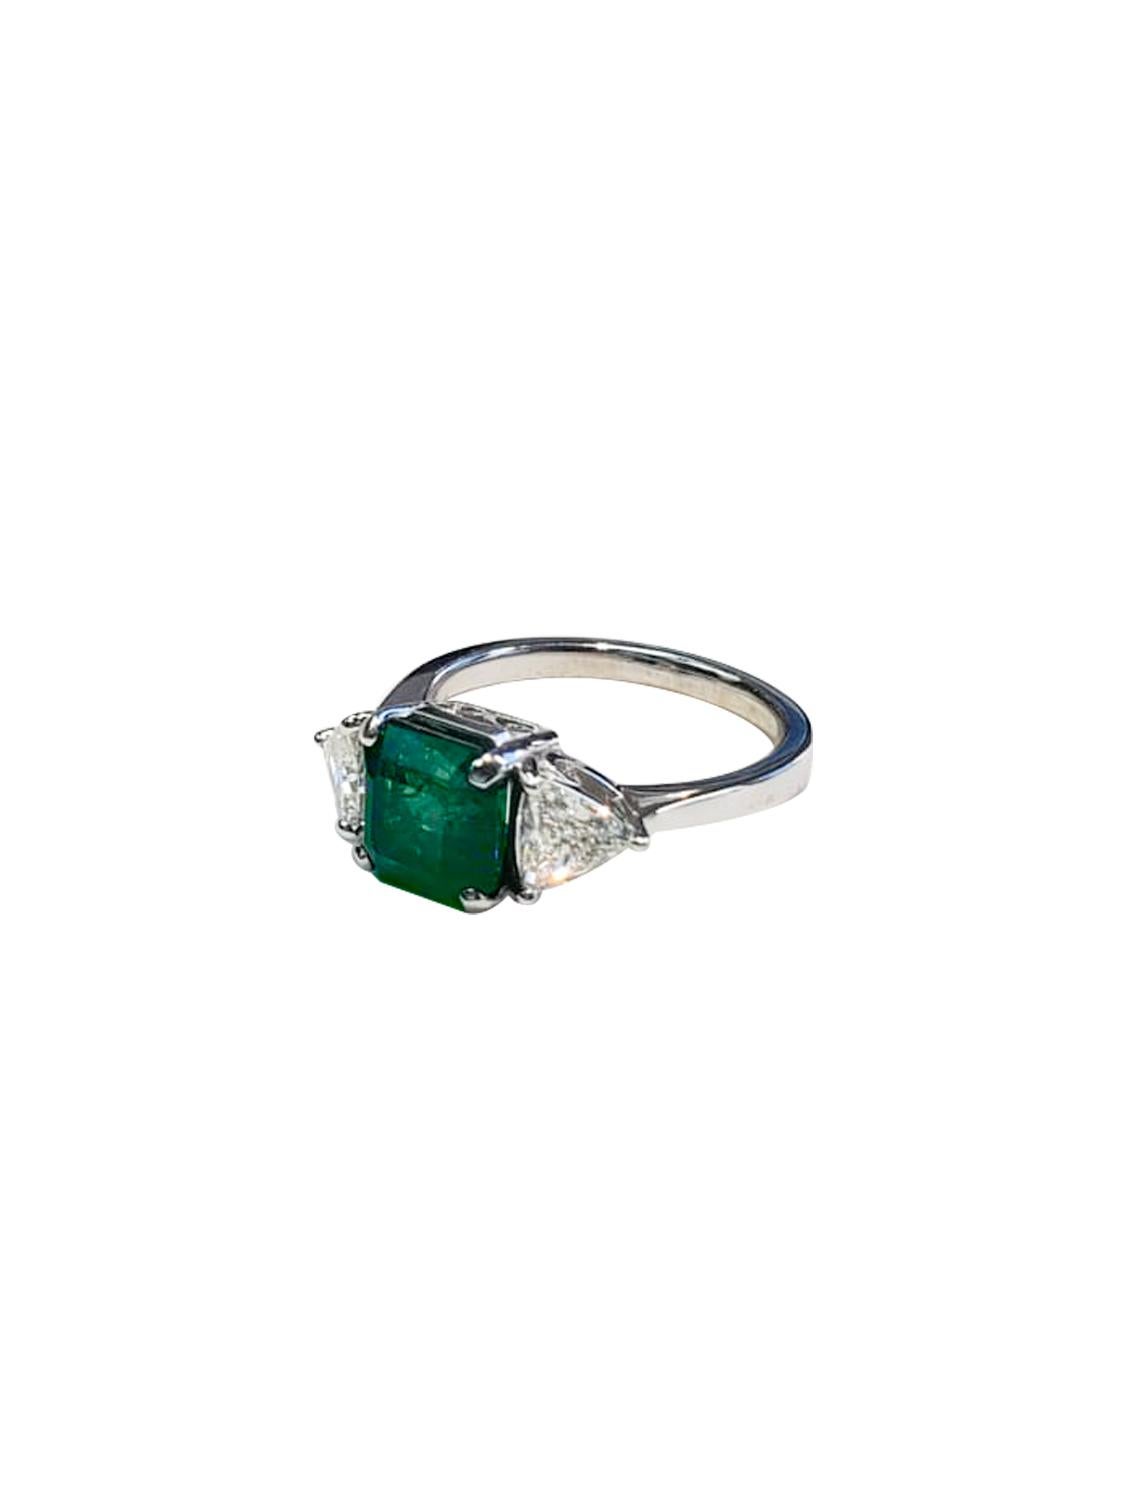 Emerald - Cut Stone (2.42crts)
Trillion Diamond  (.80crts)